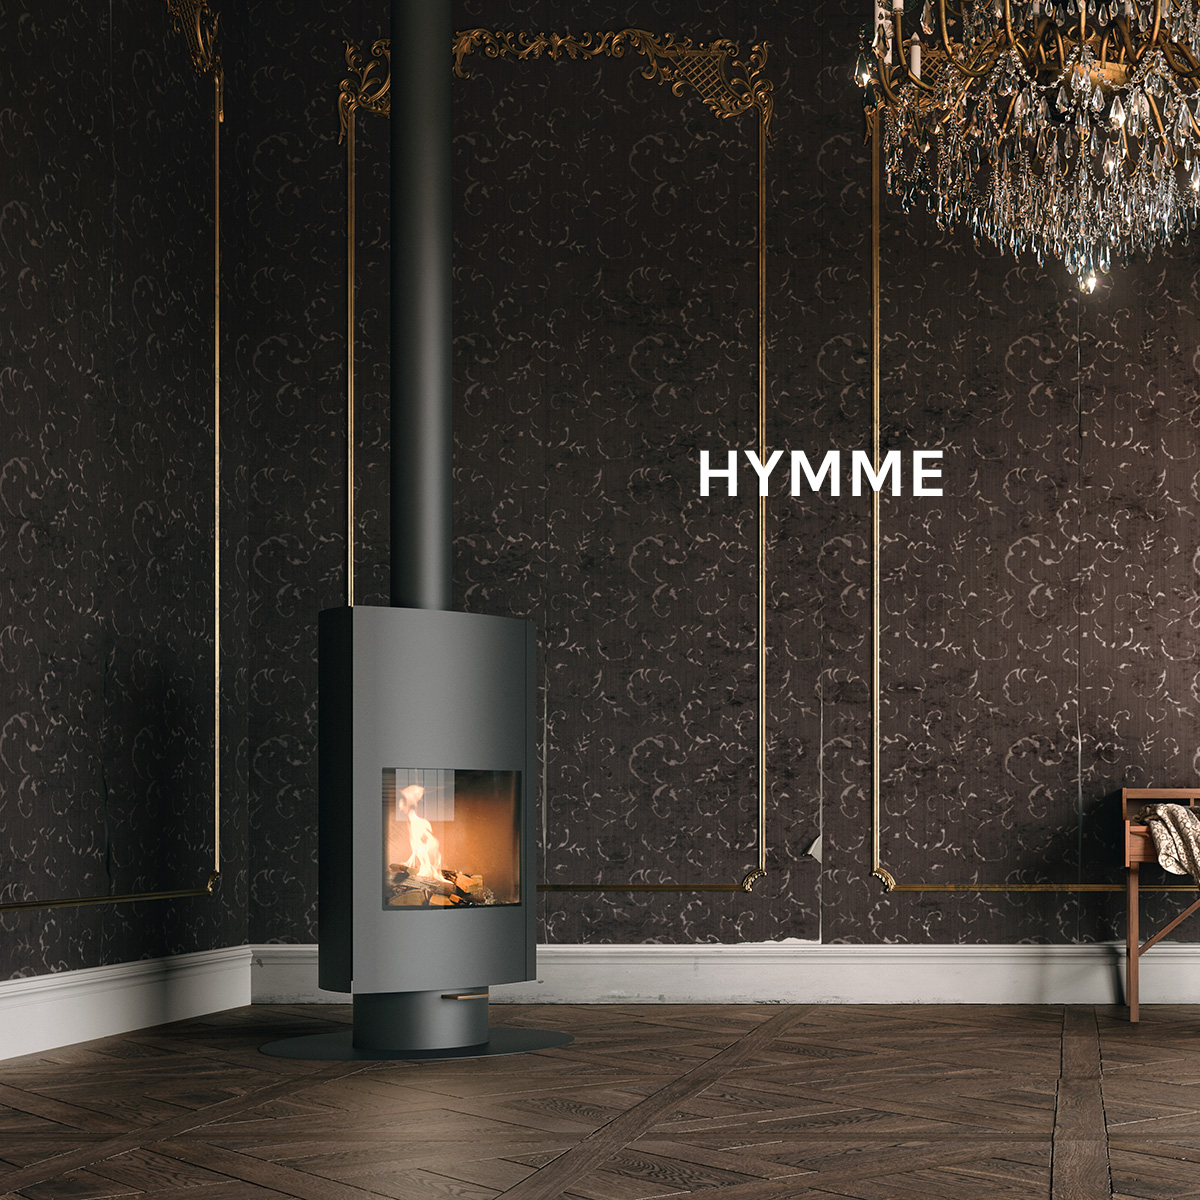 HYMME/1200x1200-Hymme-LR.jpg